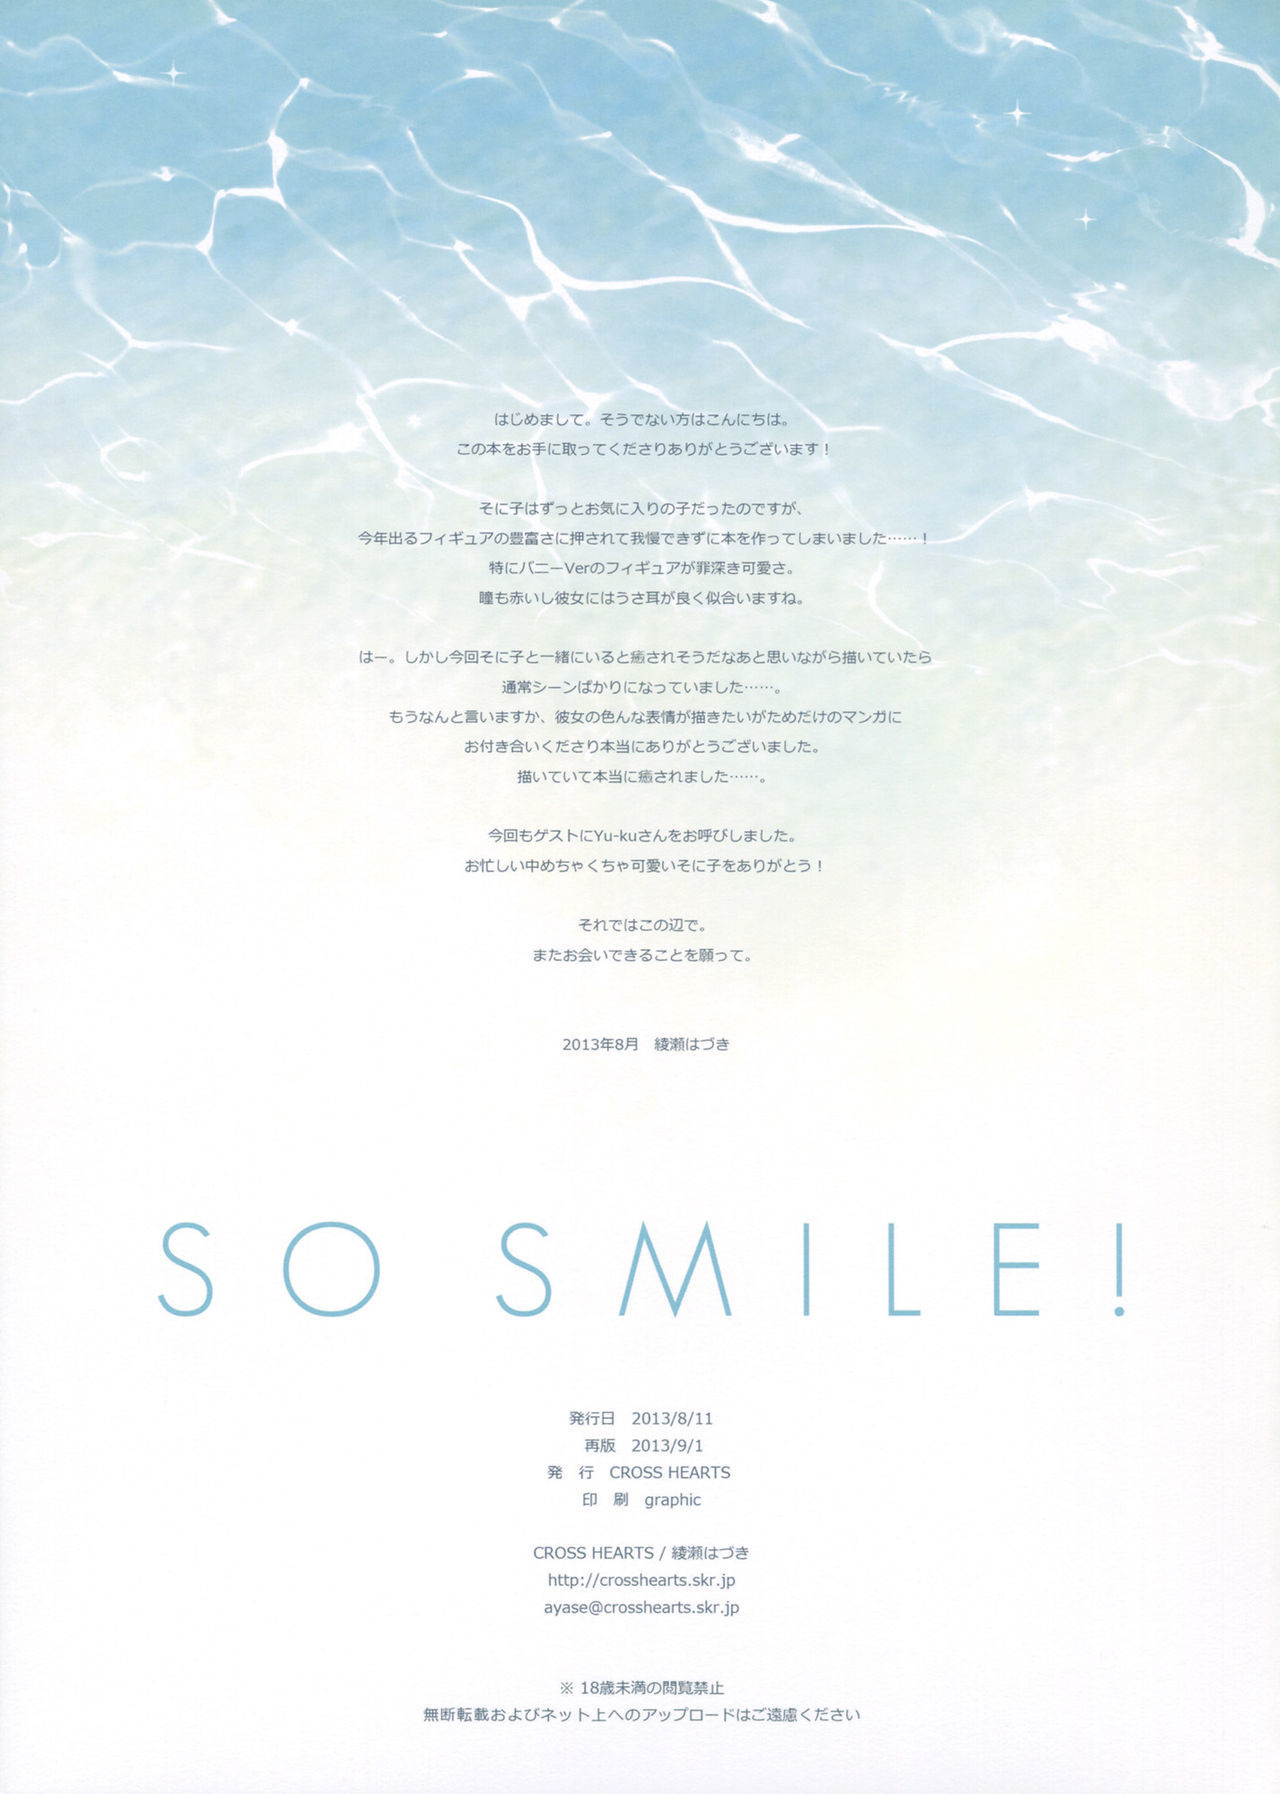 [cross दिल (ayase hazuki)] तो smile! (super sonico) [2013 09 01] [smdc]